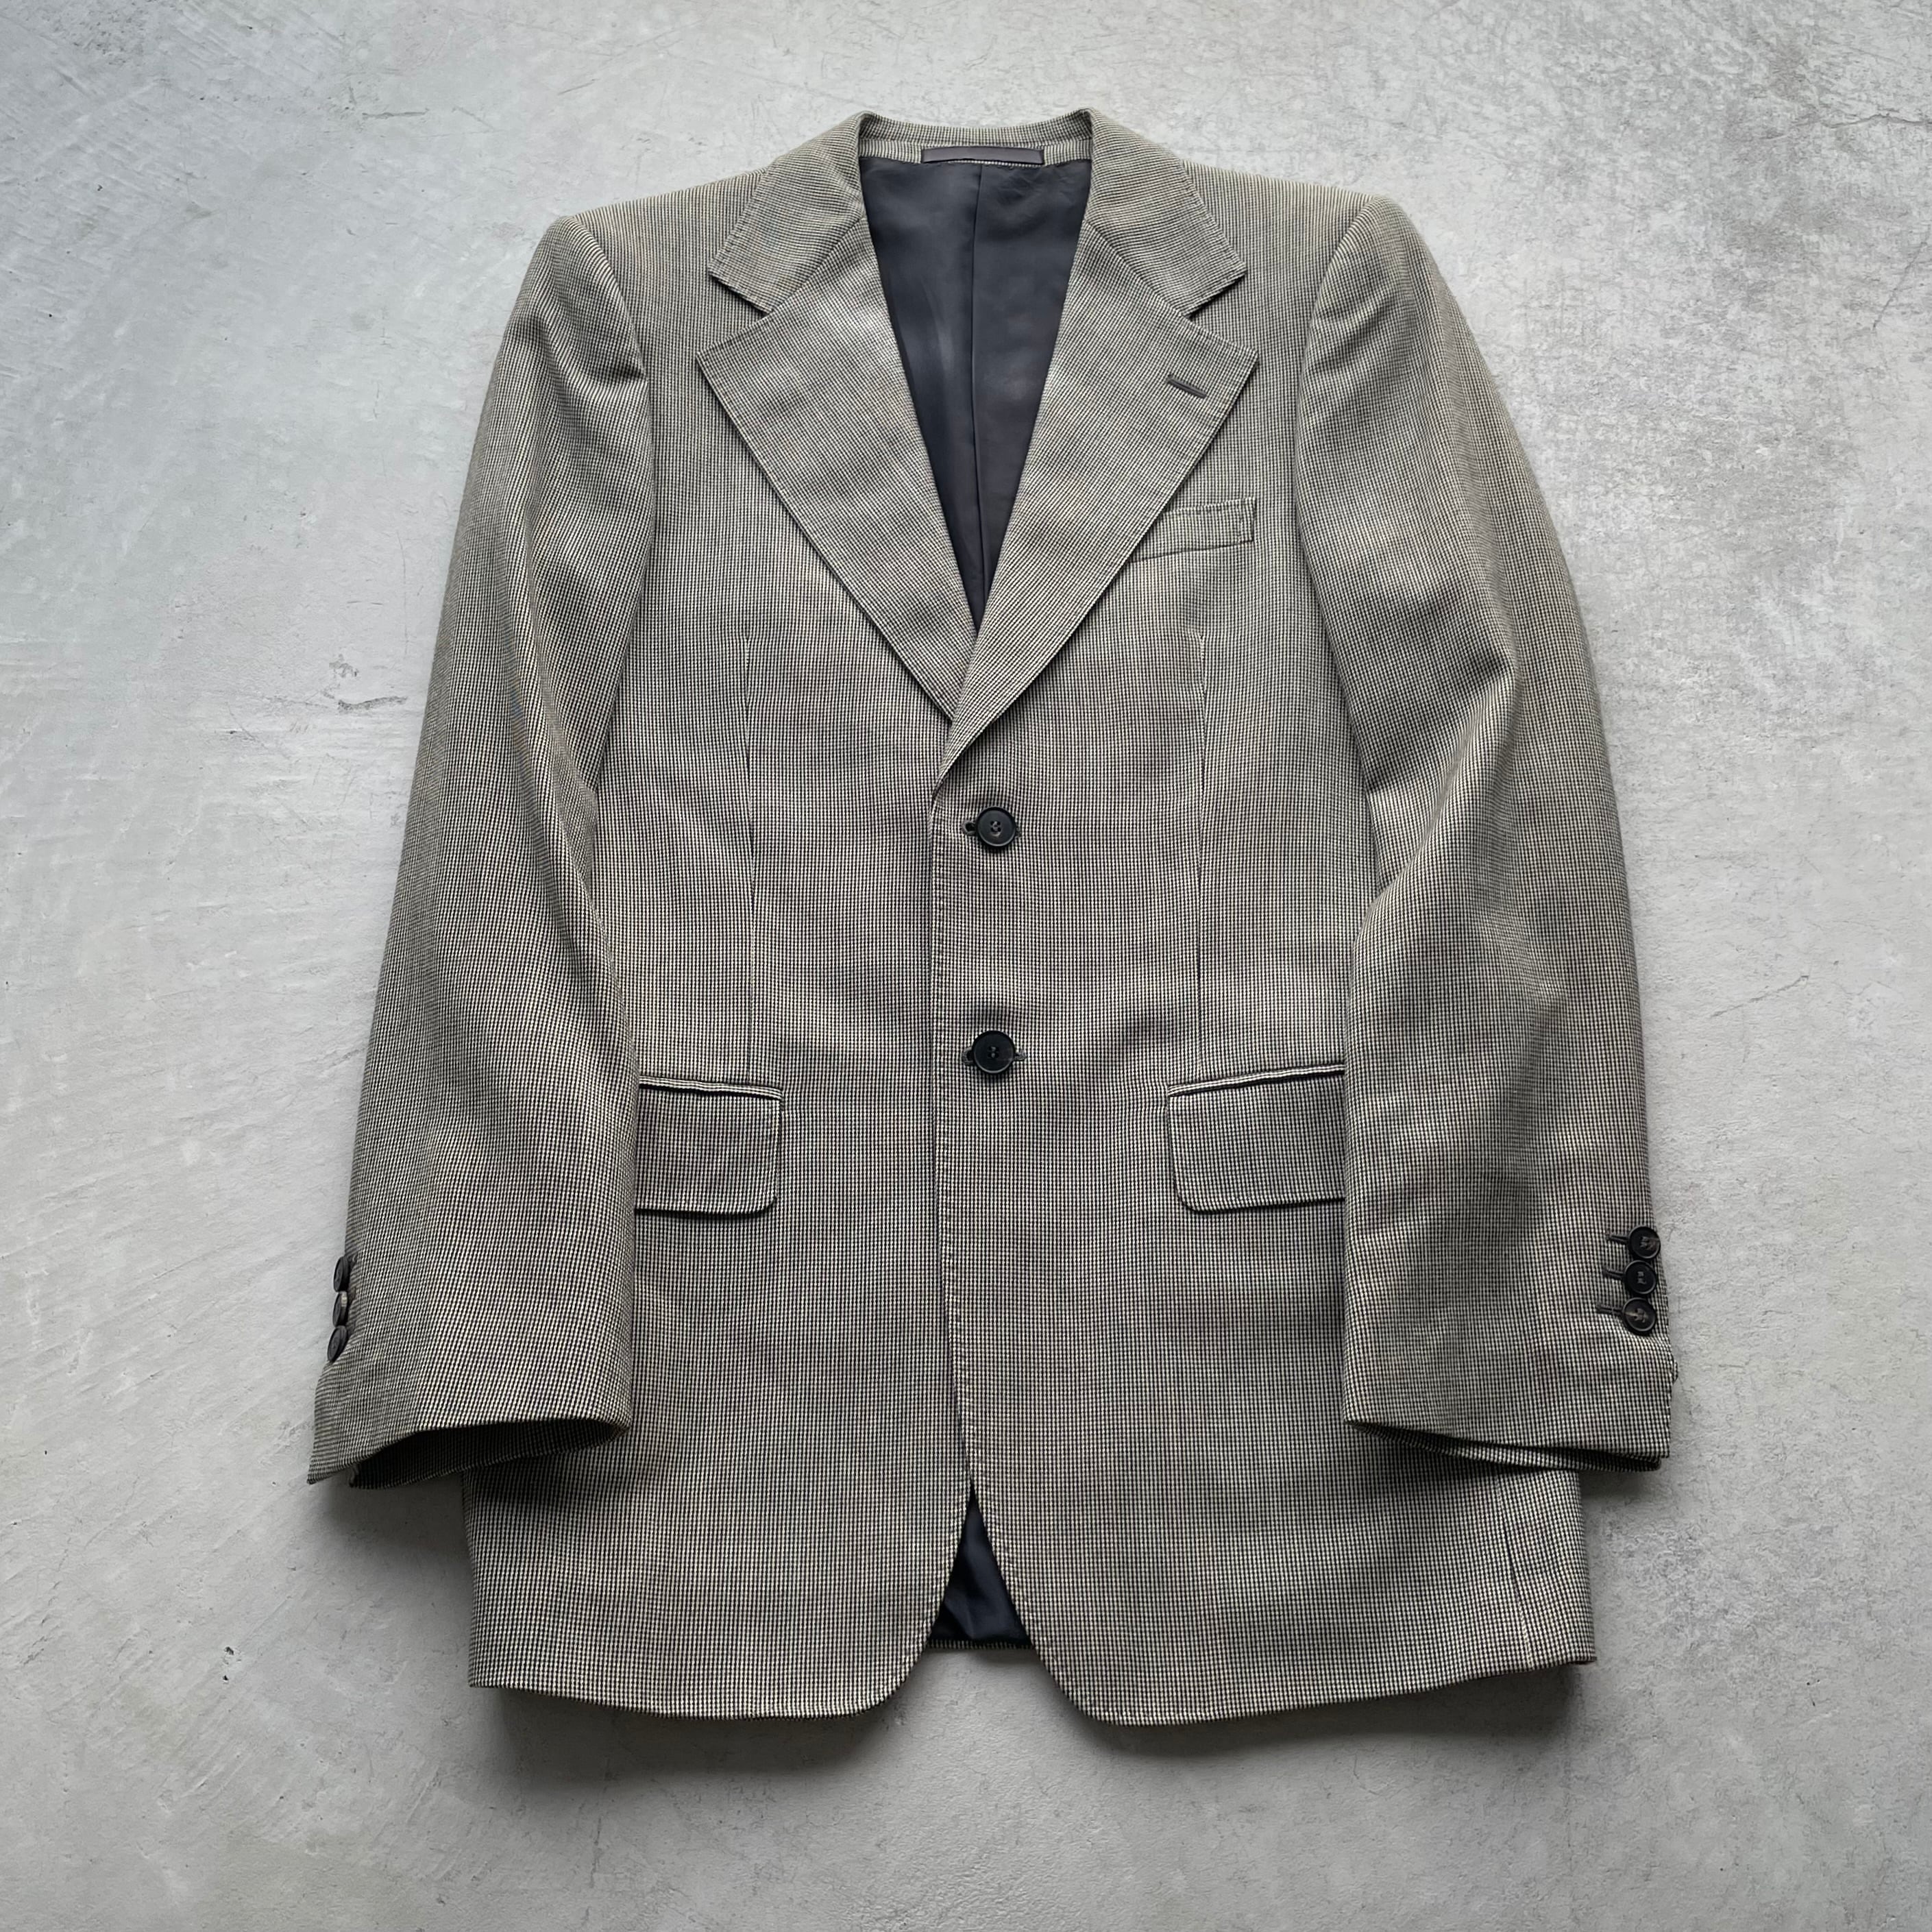 Yves Saint Laurent/Stefano Pilati suit | Seek the online